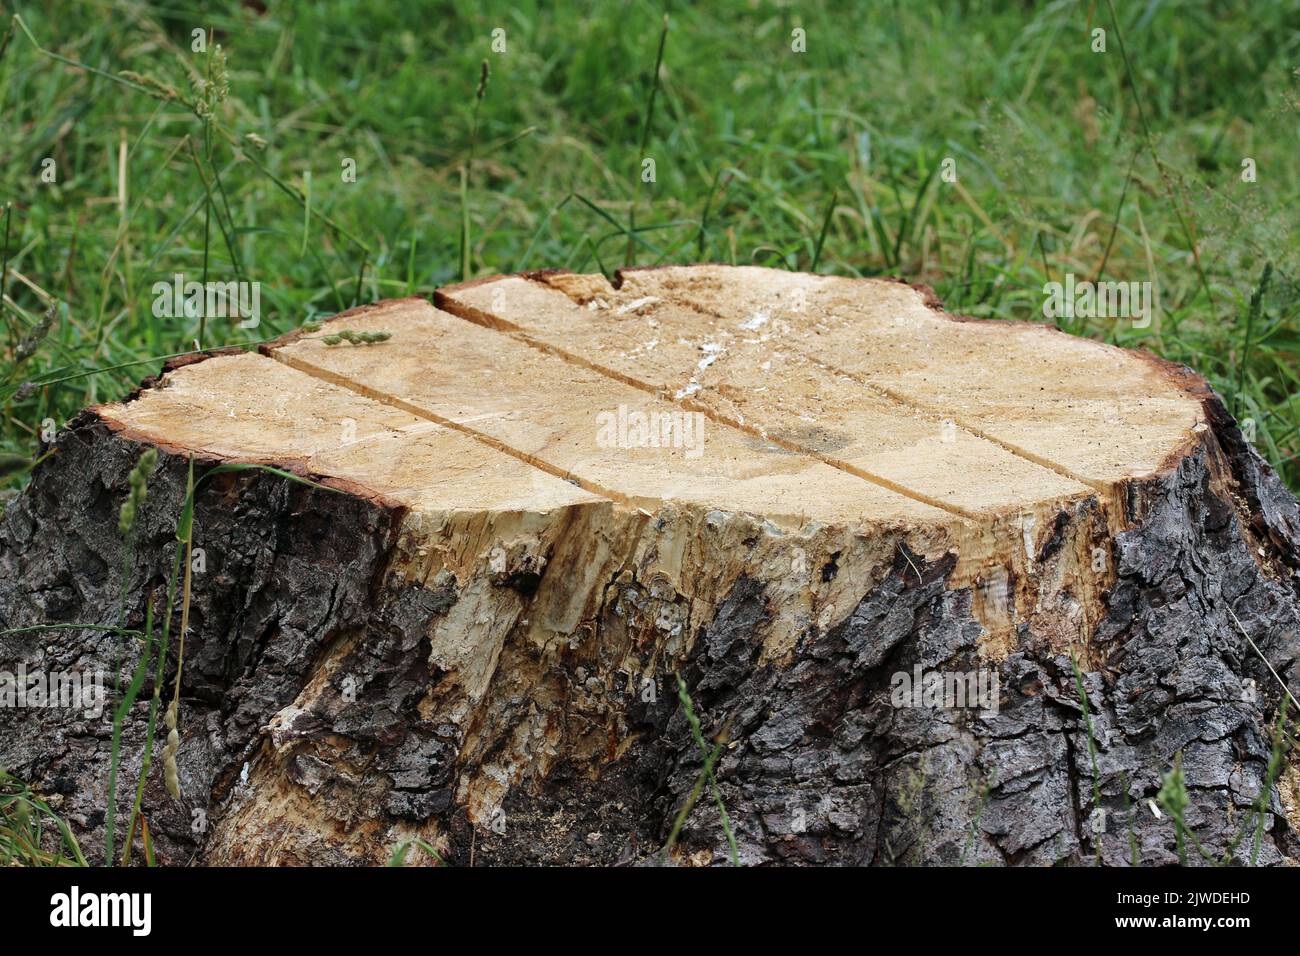 Cut tree stump after felling Stock Photo